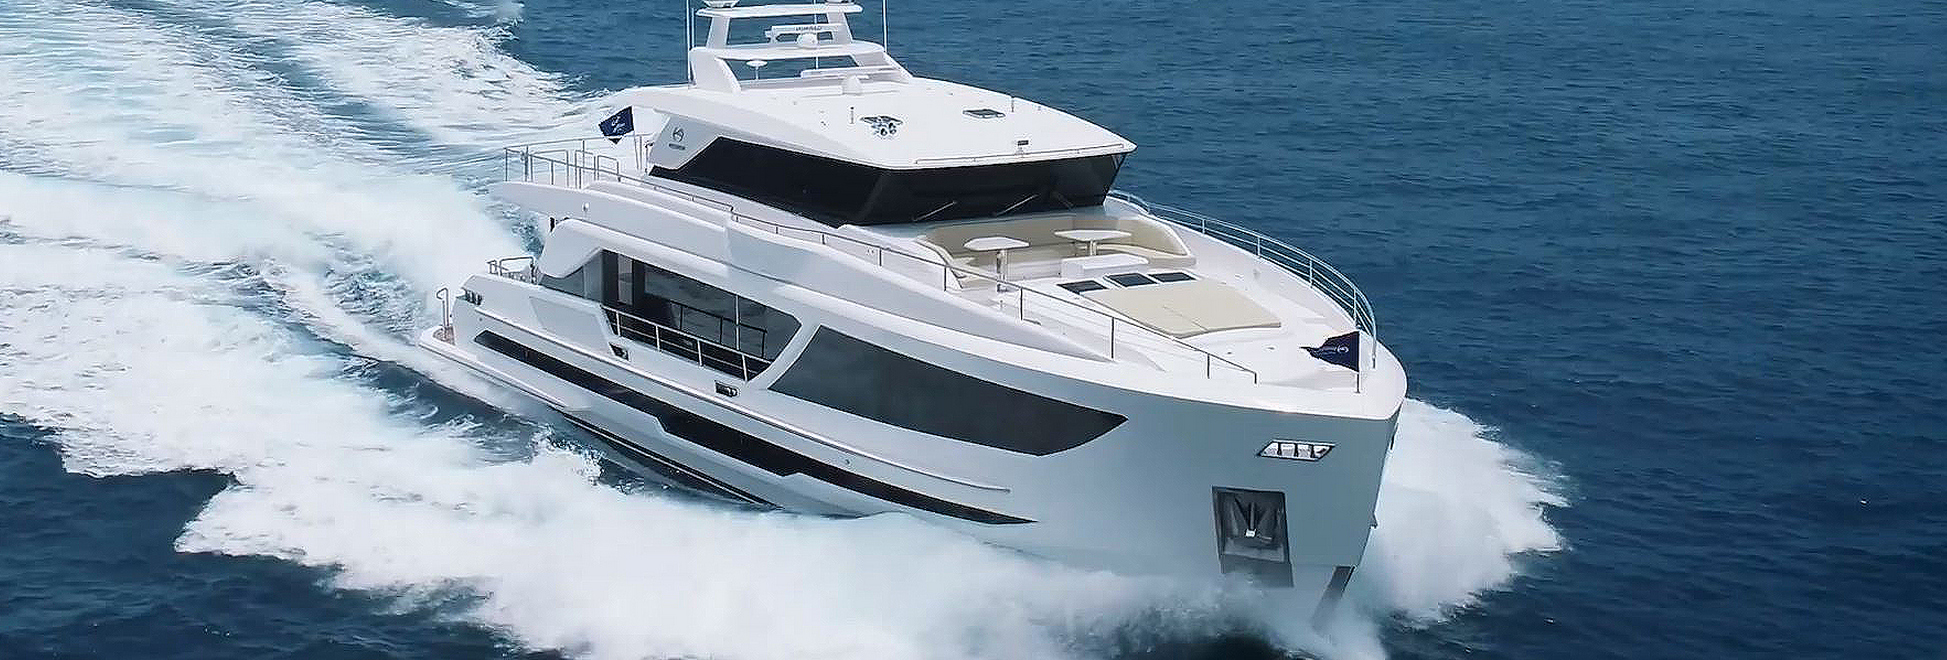 AQUA LIFE Motor Yacht Charter in the Bahamas - Luxury Charter Group